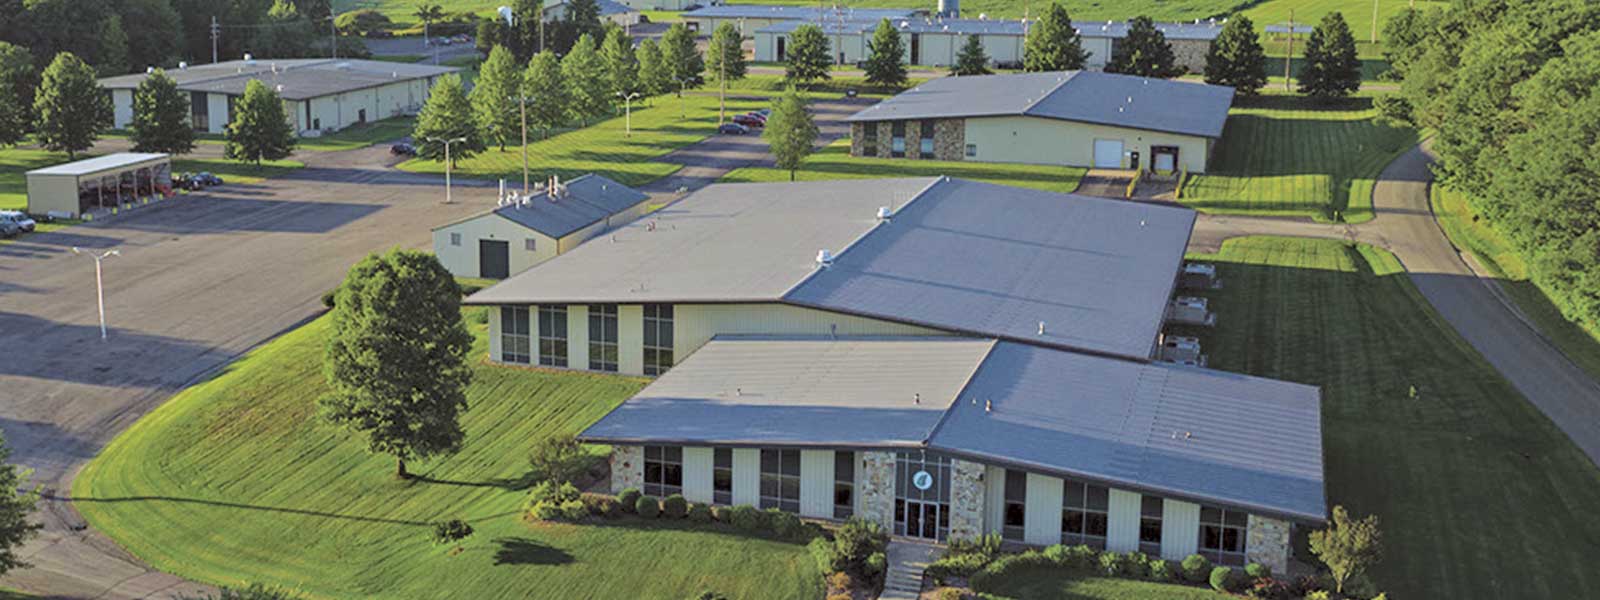 Greenleaf Corporation Facilities in Saegertown, Pennsylvania